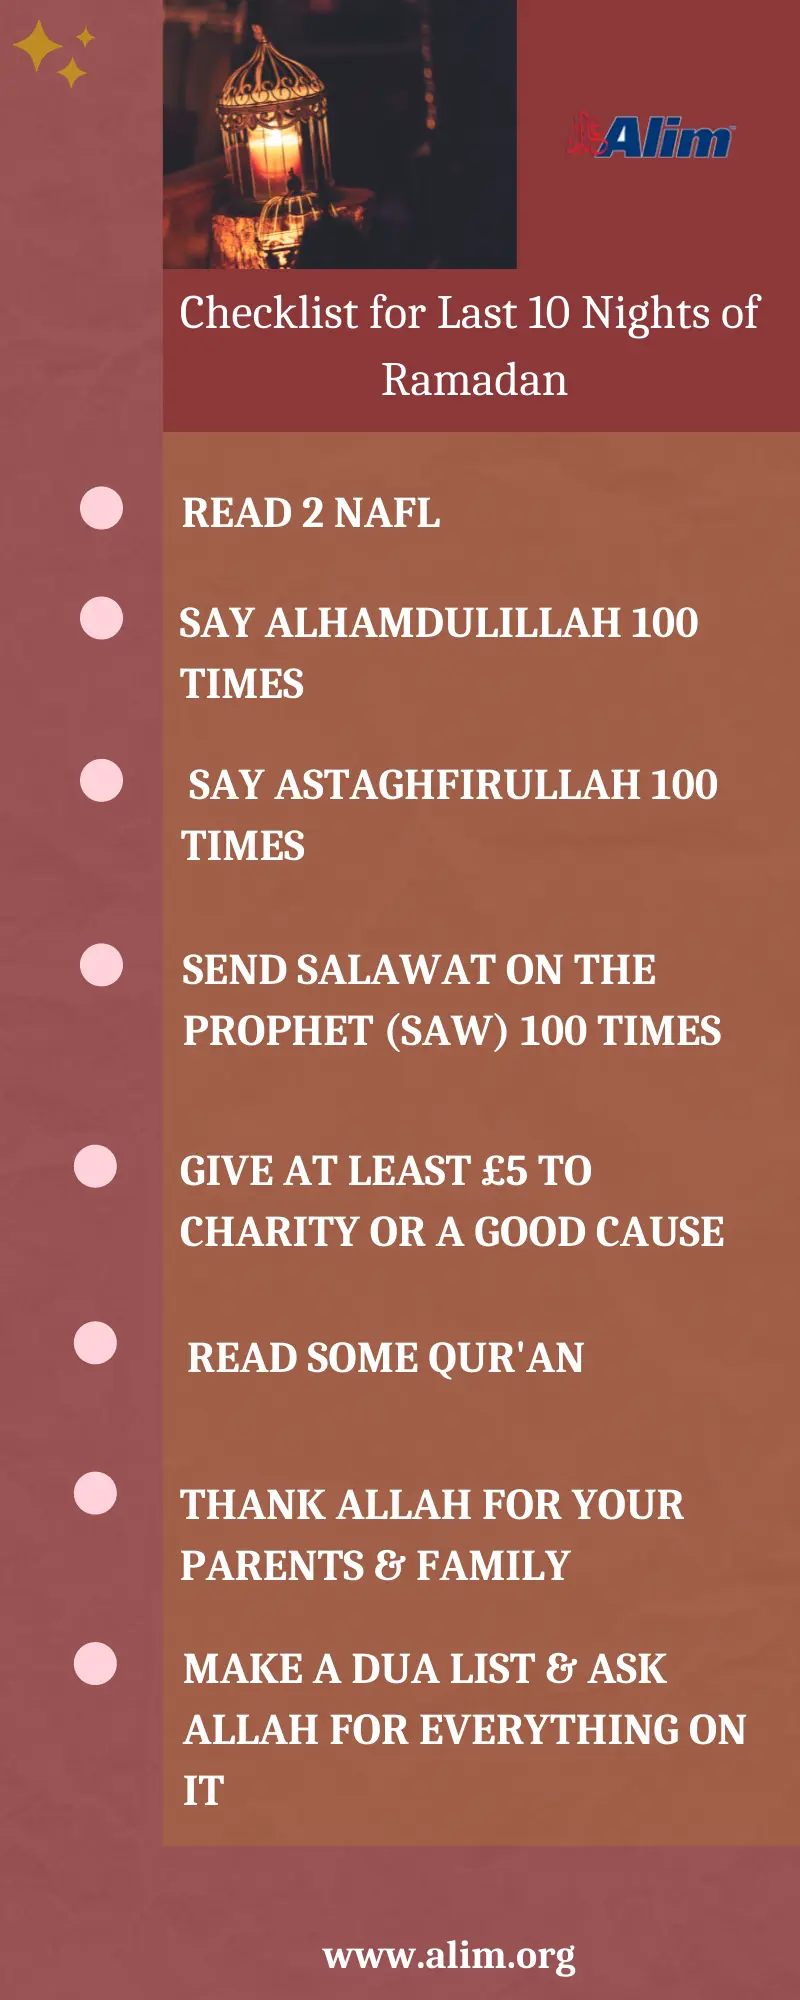 Checklist for last 10 nights of Ramadan